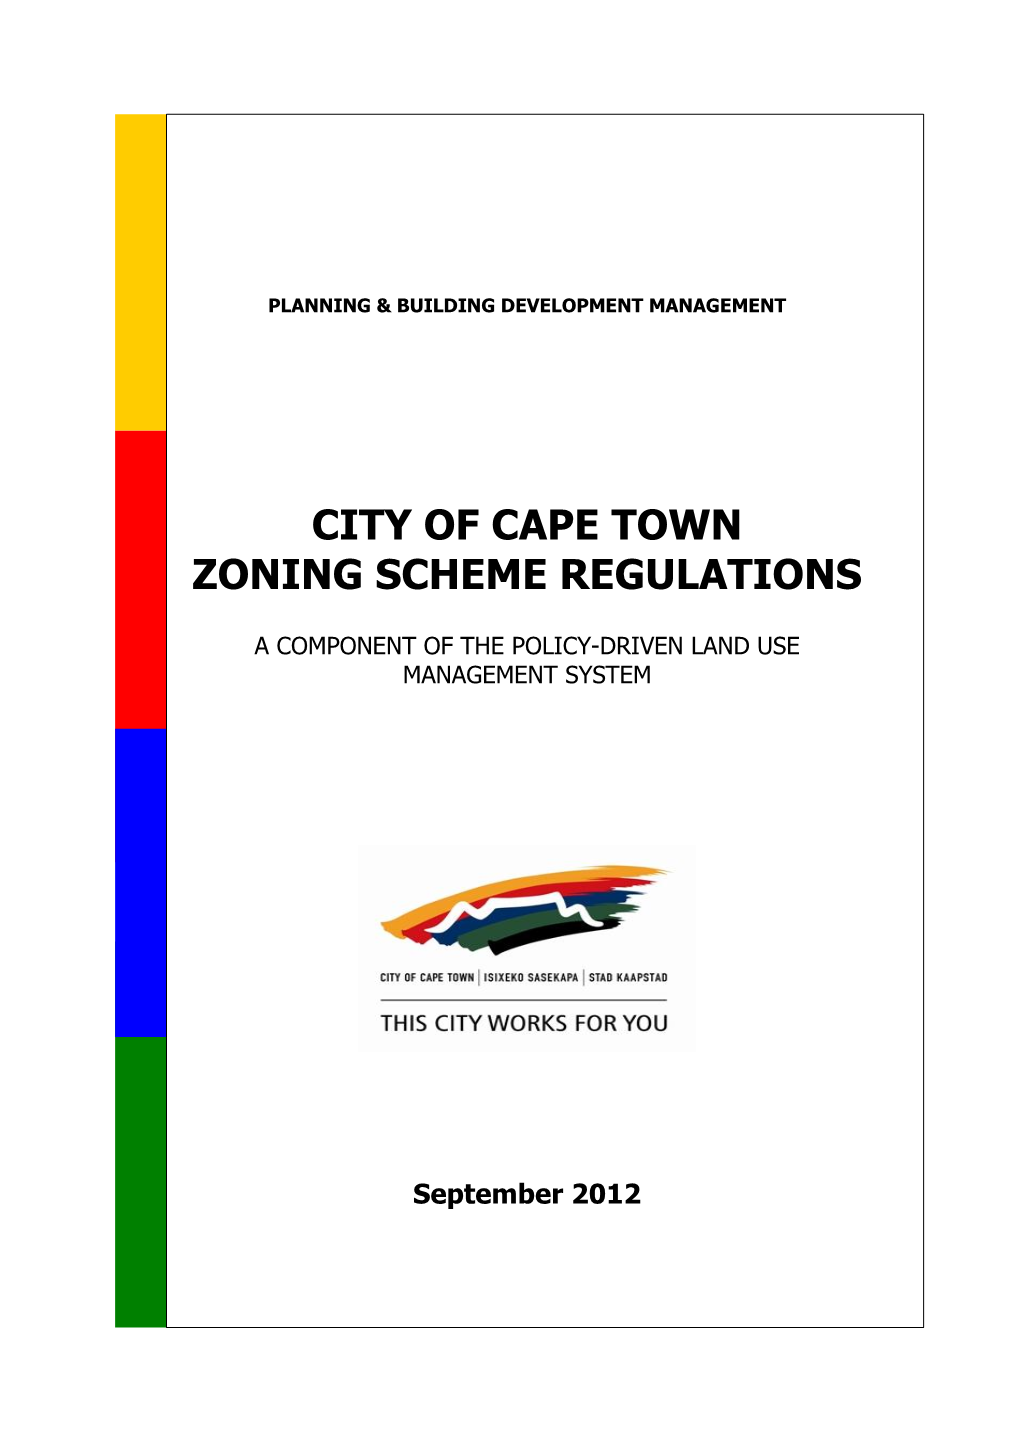 City of Cape Town Zoning Scheme Regulations